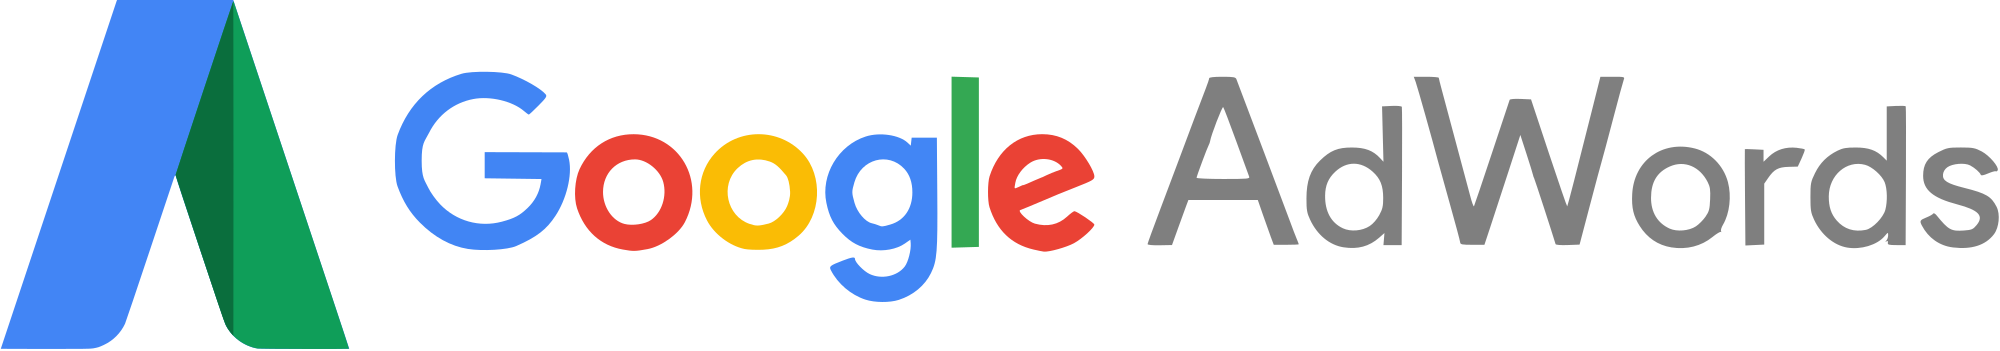 Google Adwords Logo PNG - 34143